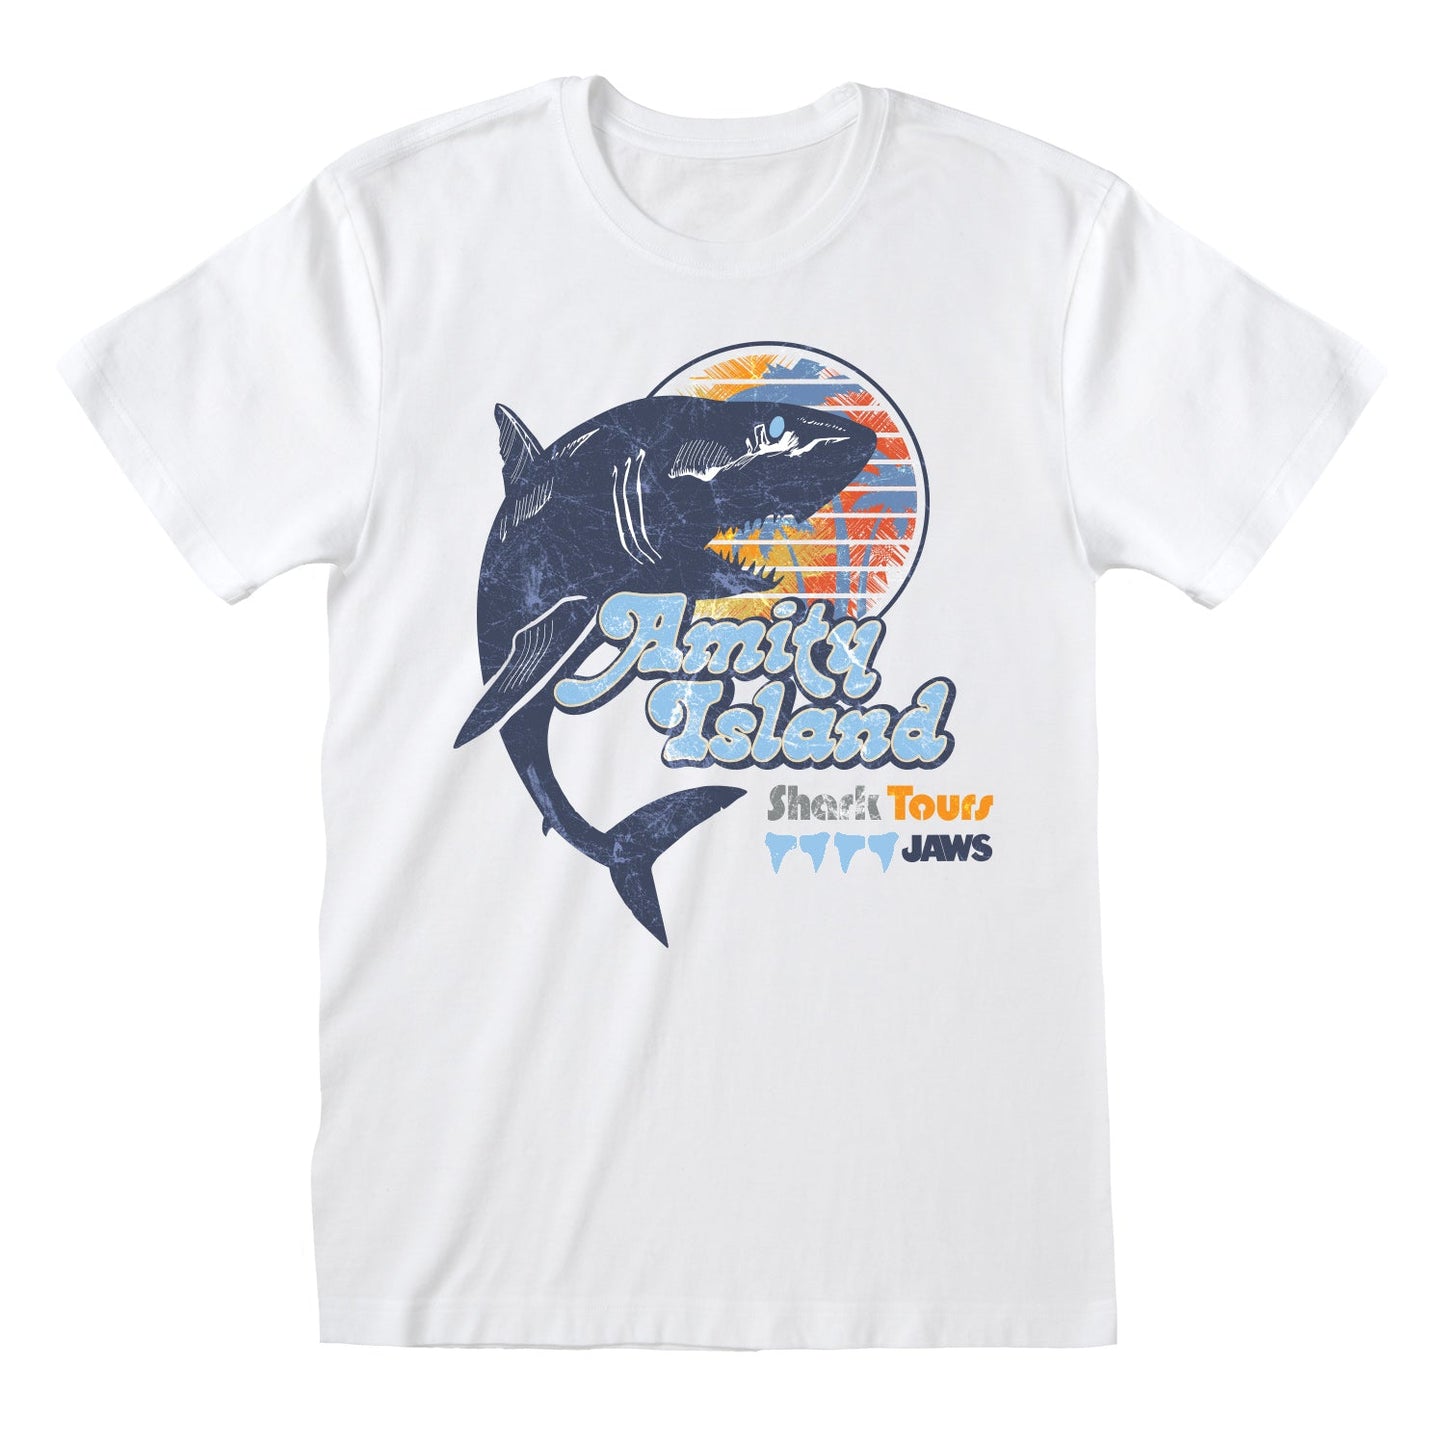 Jaws Amity Island Shark Tours Men's T-shirt